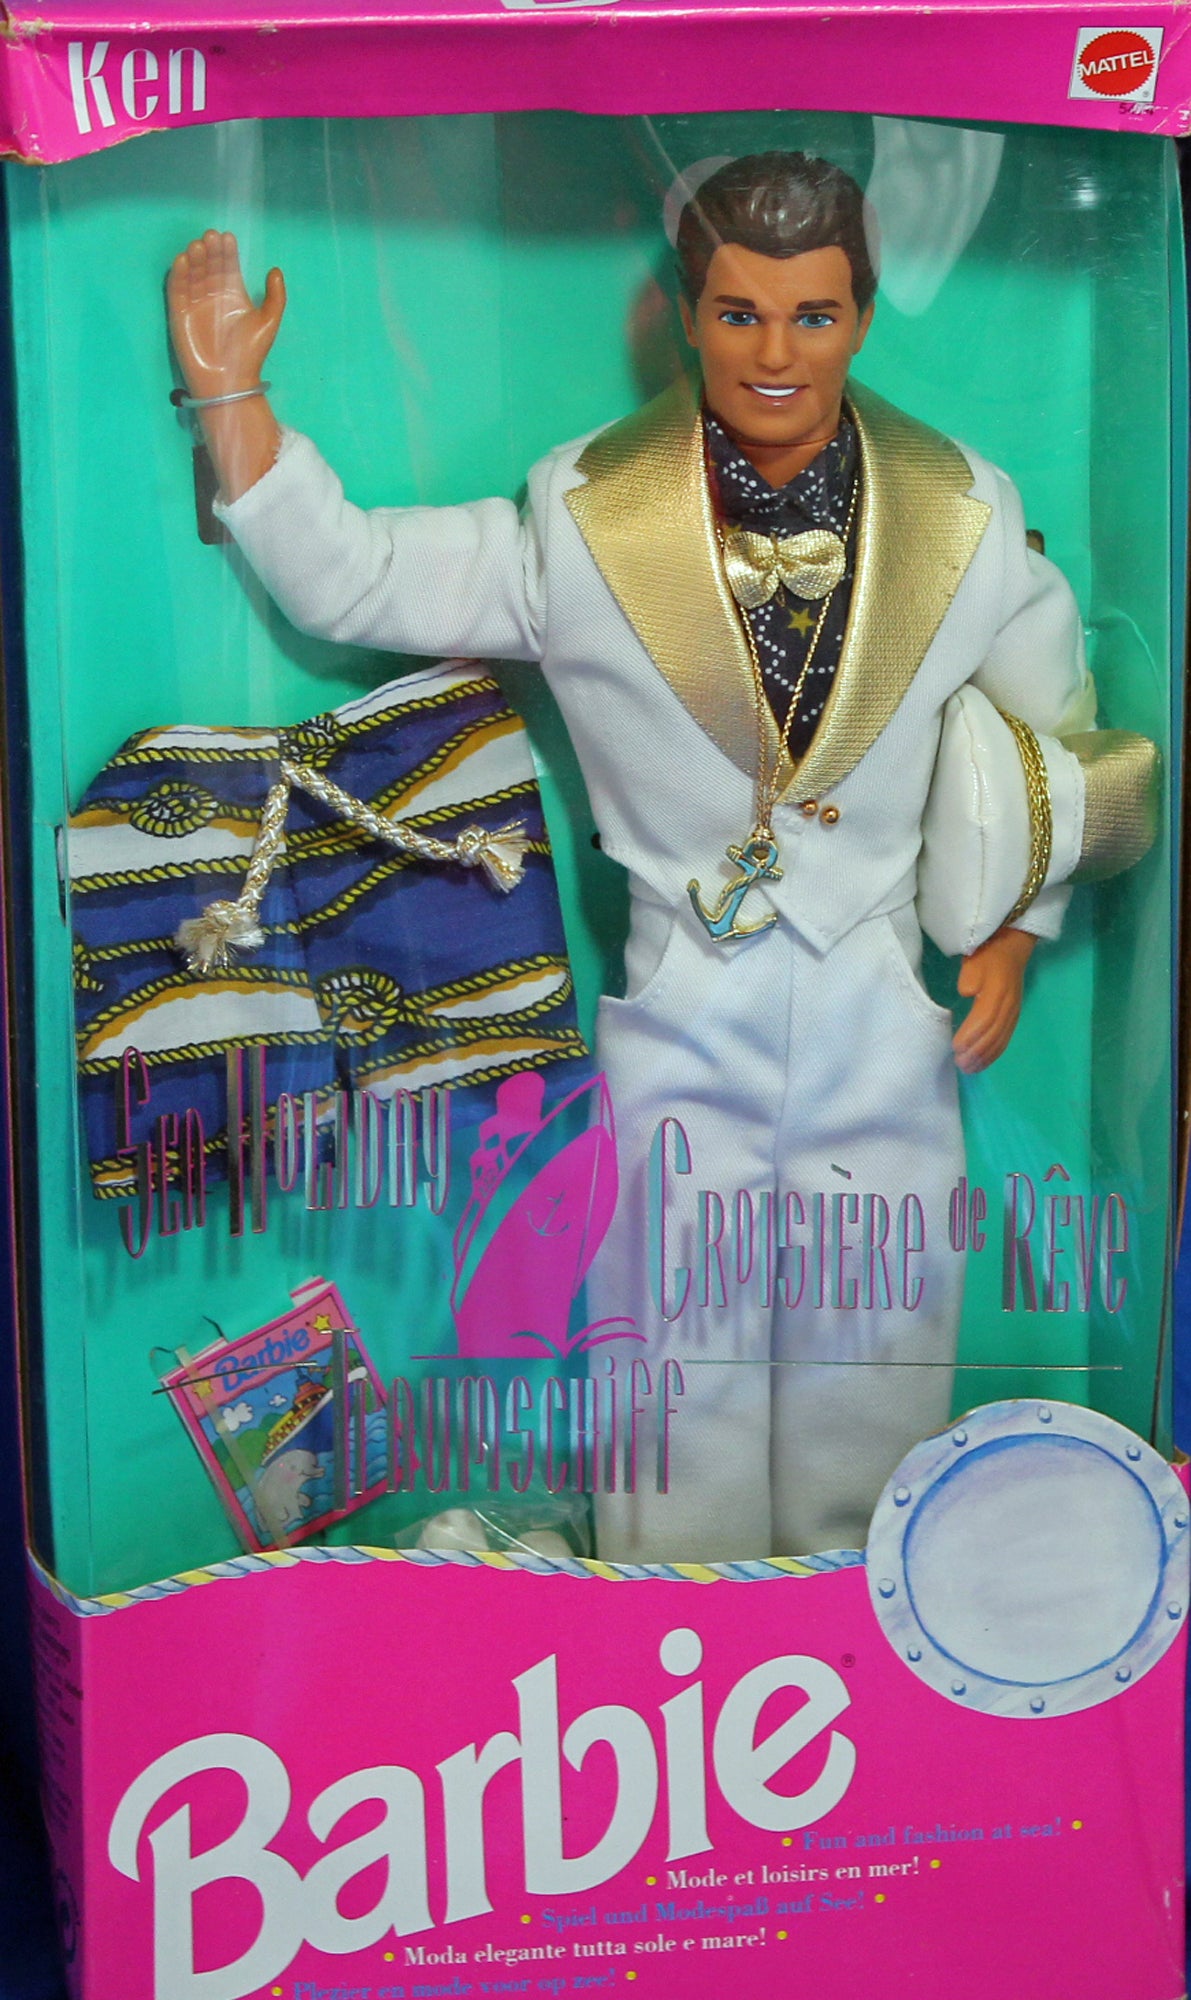 1992 Glitter Beach Ken Doll – Sell4Value